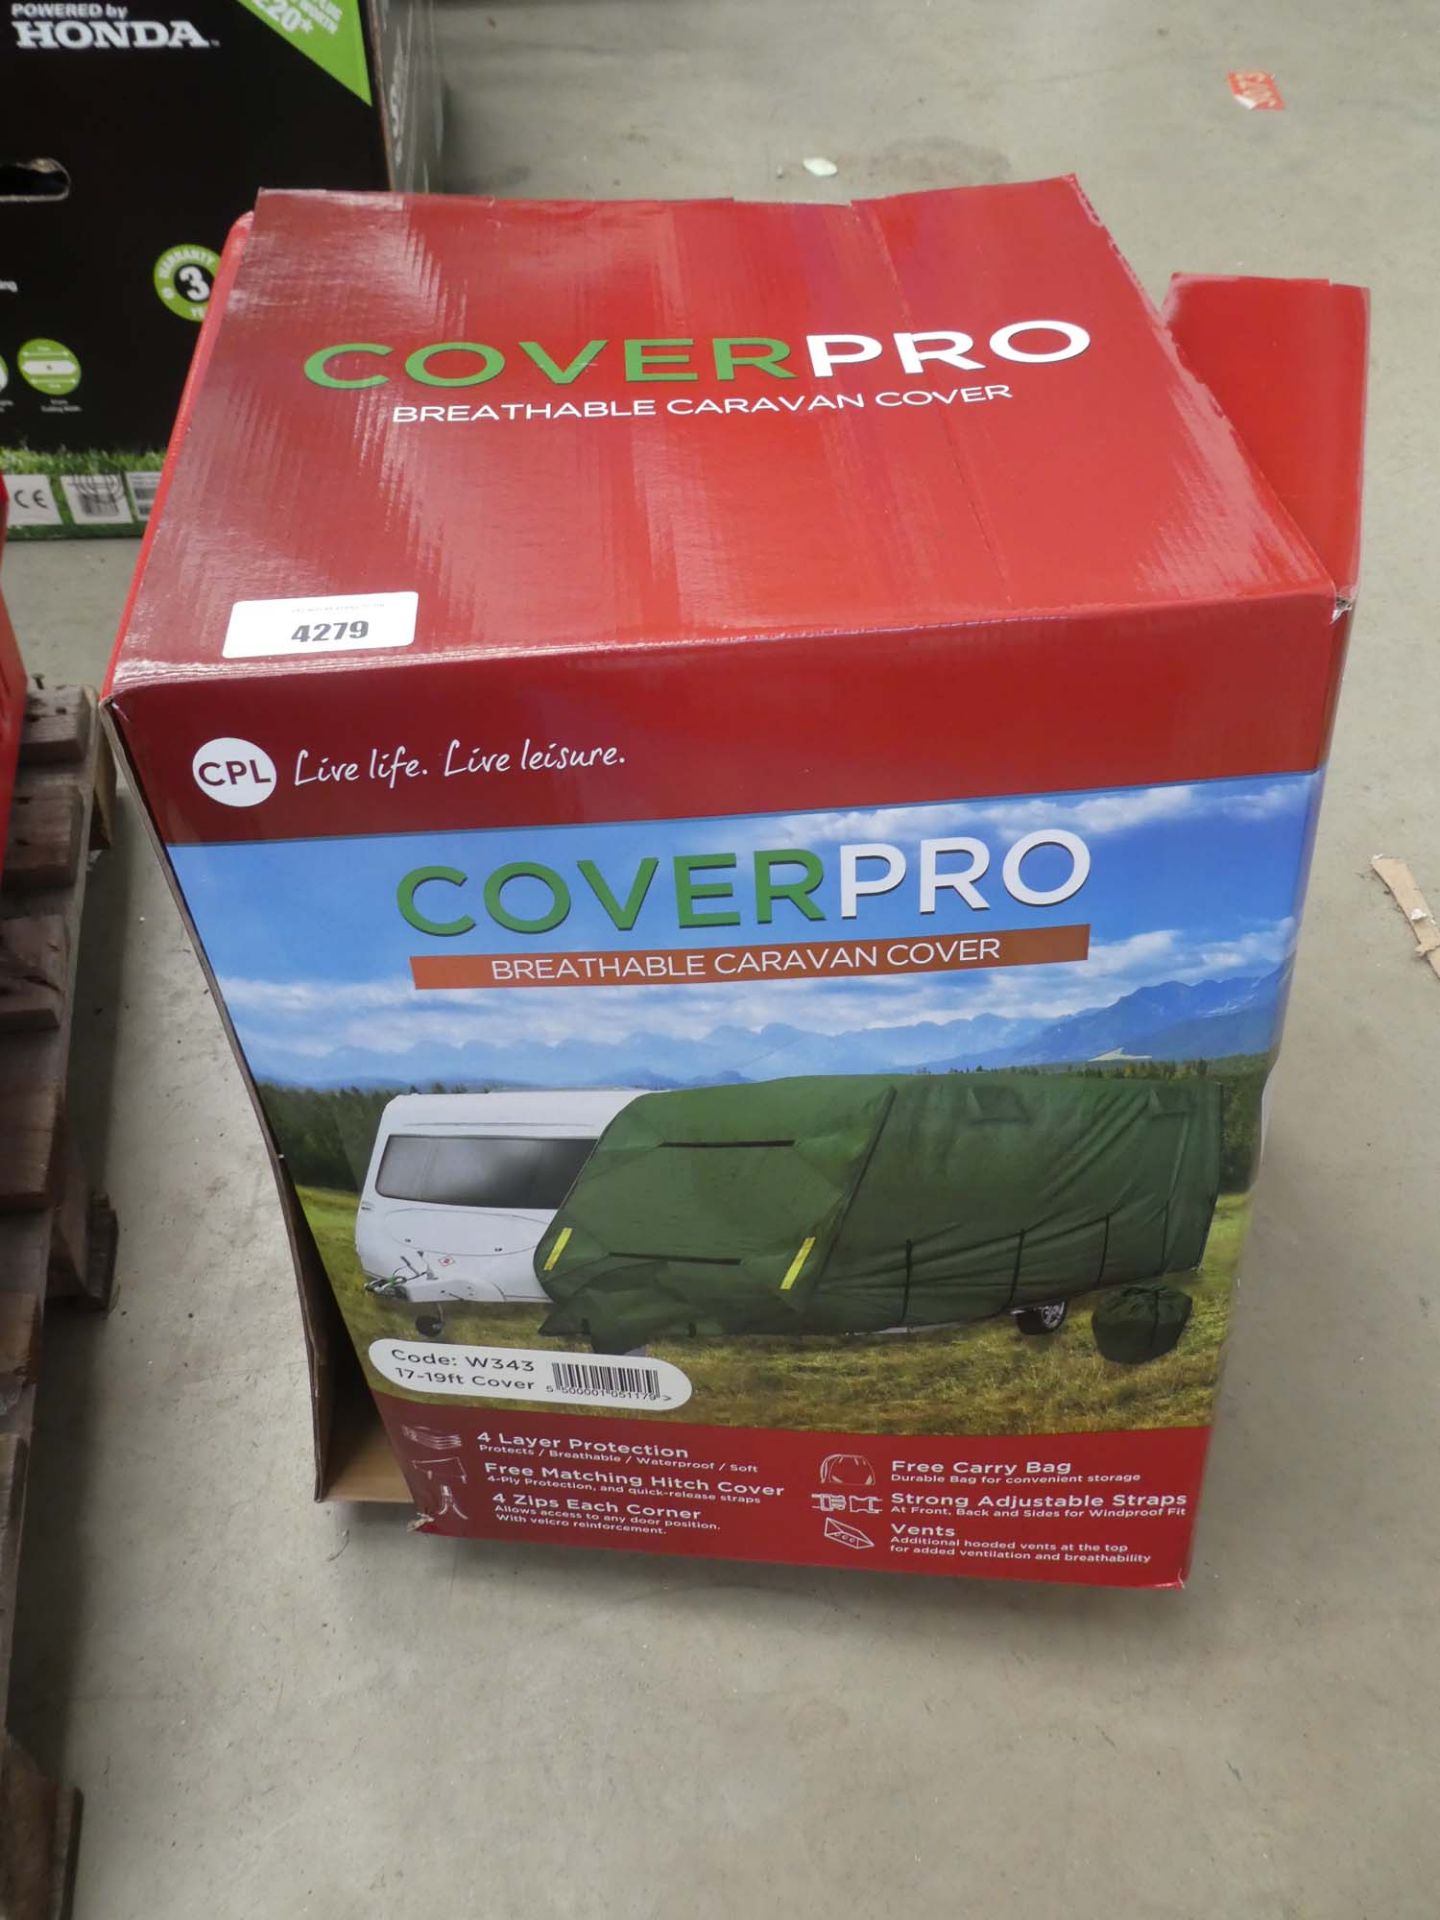 Cover Pro breathable caravan cover